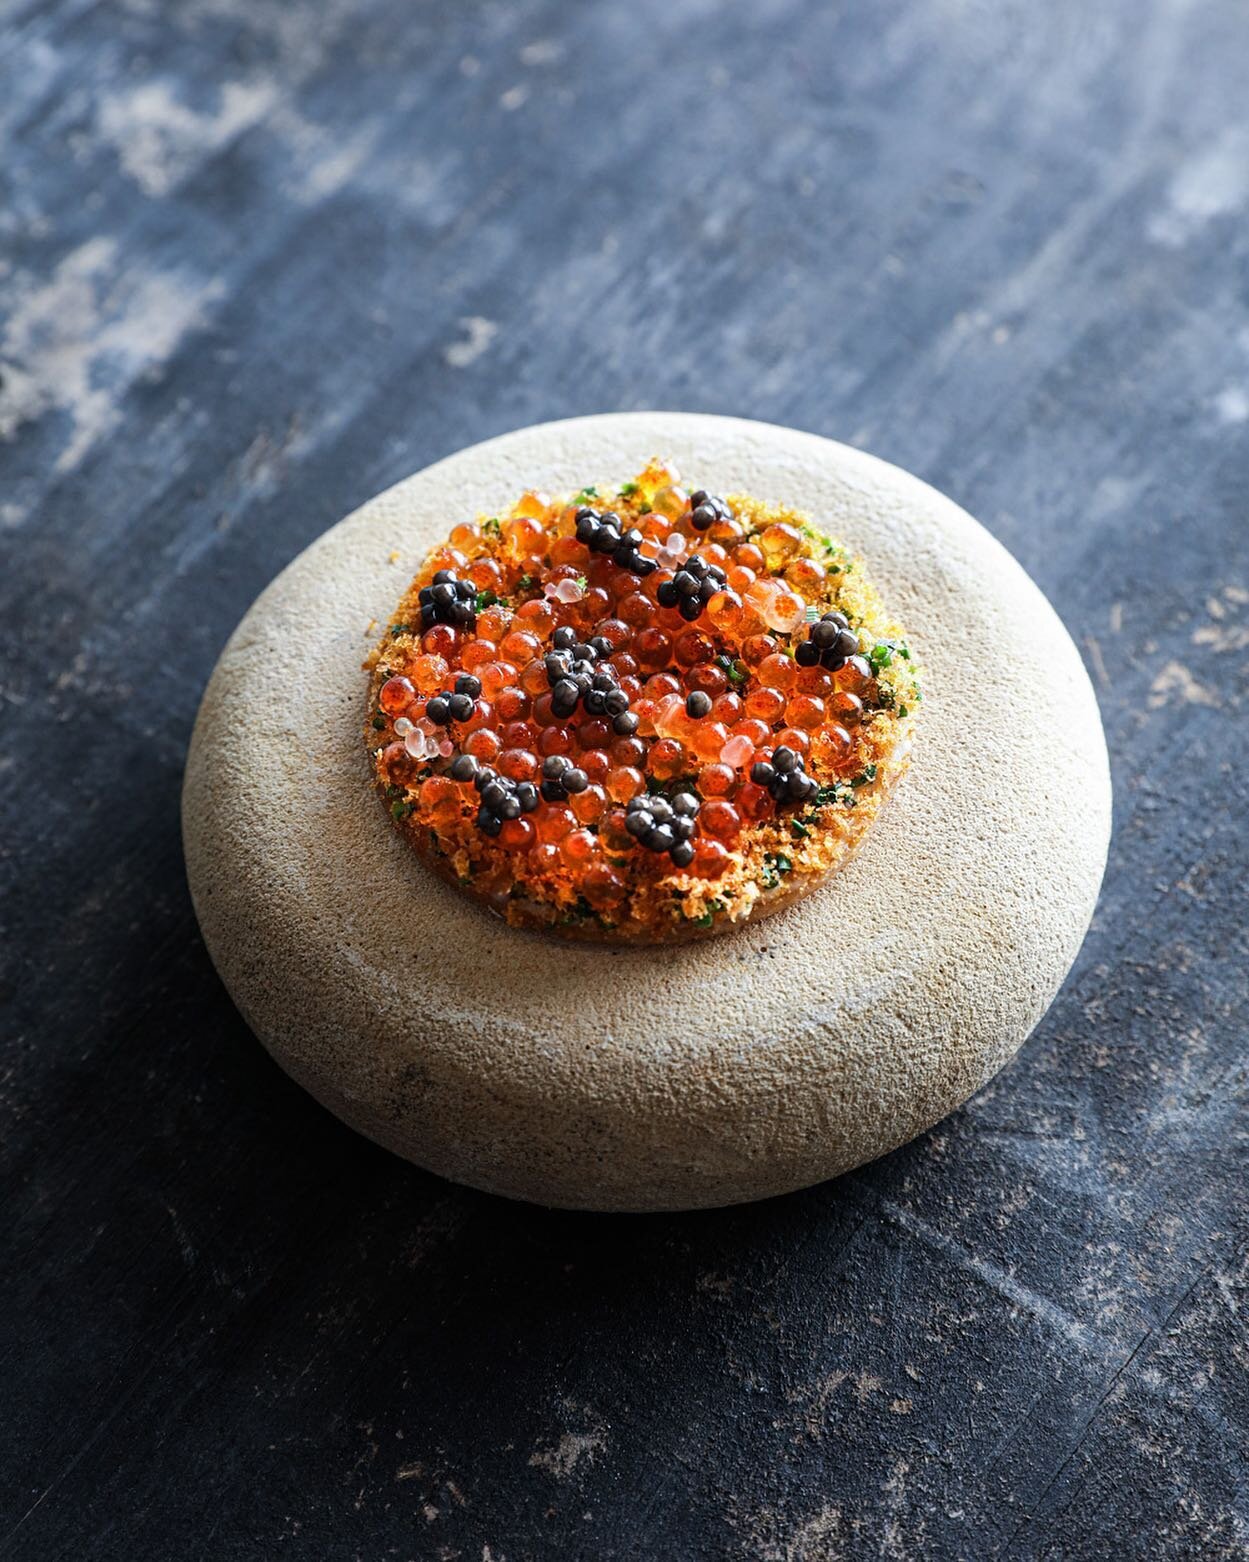 &quot;Caviar Explosion&quot;
LESS Eatery event: Chef's Invitation #1 @less_eatery @gertdemangeleer @ruigevermeire ⁠⠀
⁠⠀
⁠⠀
⁠⠀
#foodfluffer ⁠⠀
#chefstalk⁠⠀
#chefstagram⁠⠀
#chefsofinstagram⁠⠀
#chefslife⁠⠀
#chefsoninstagram⁠⠀
#foodphotography⁠⠀
#foodsta